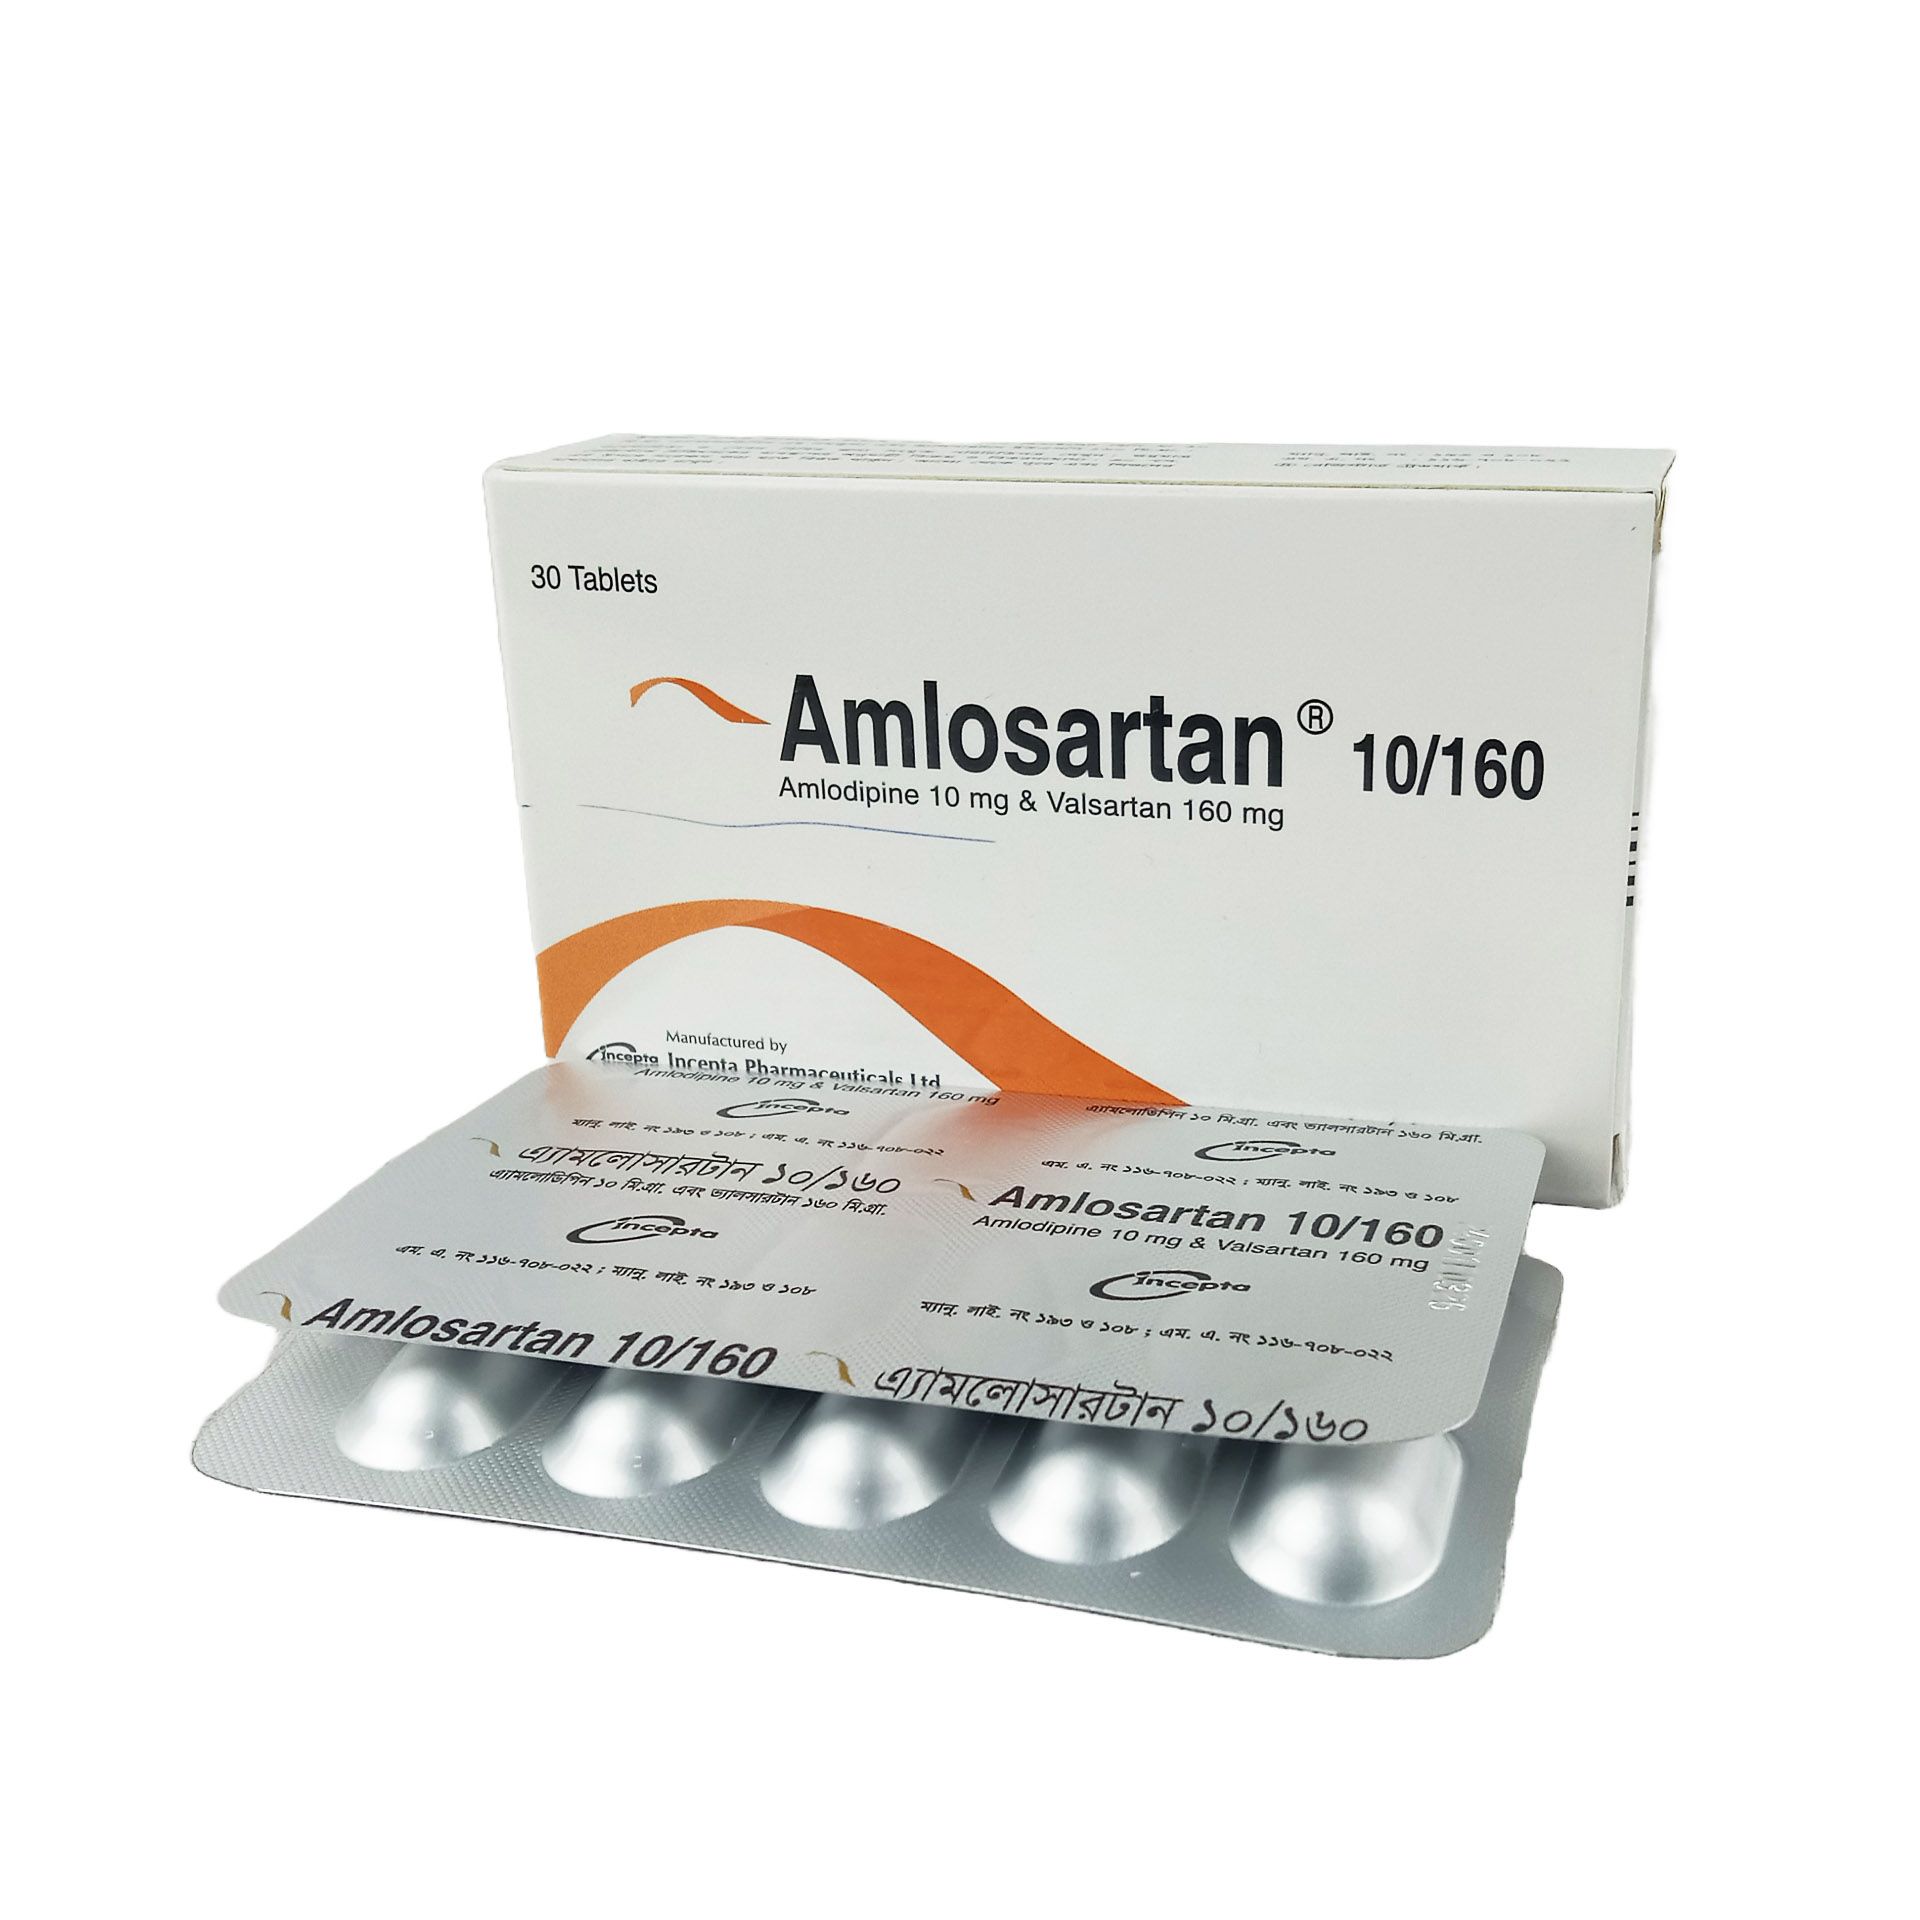 Amlosartan 10/160 10mg+160mg Tablet